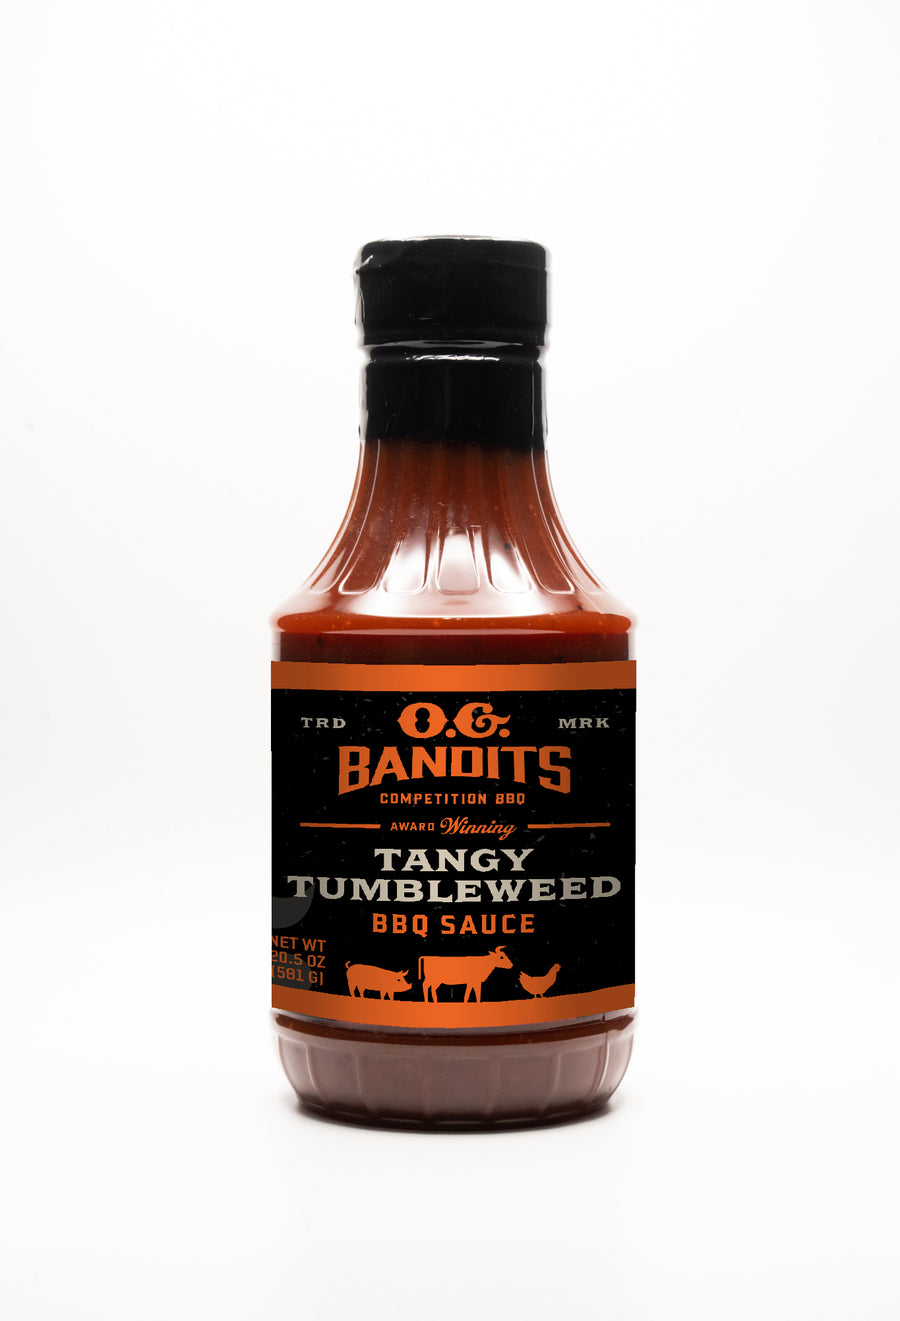 O.G. Bandits Tangy Tumbleweed BBQ Sauce